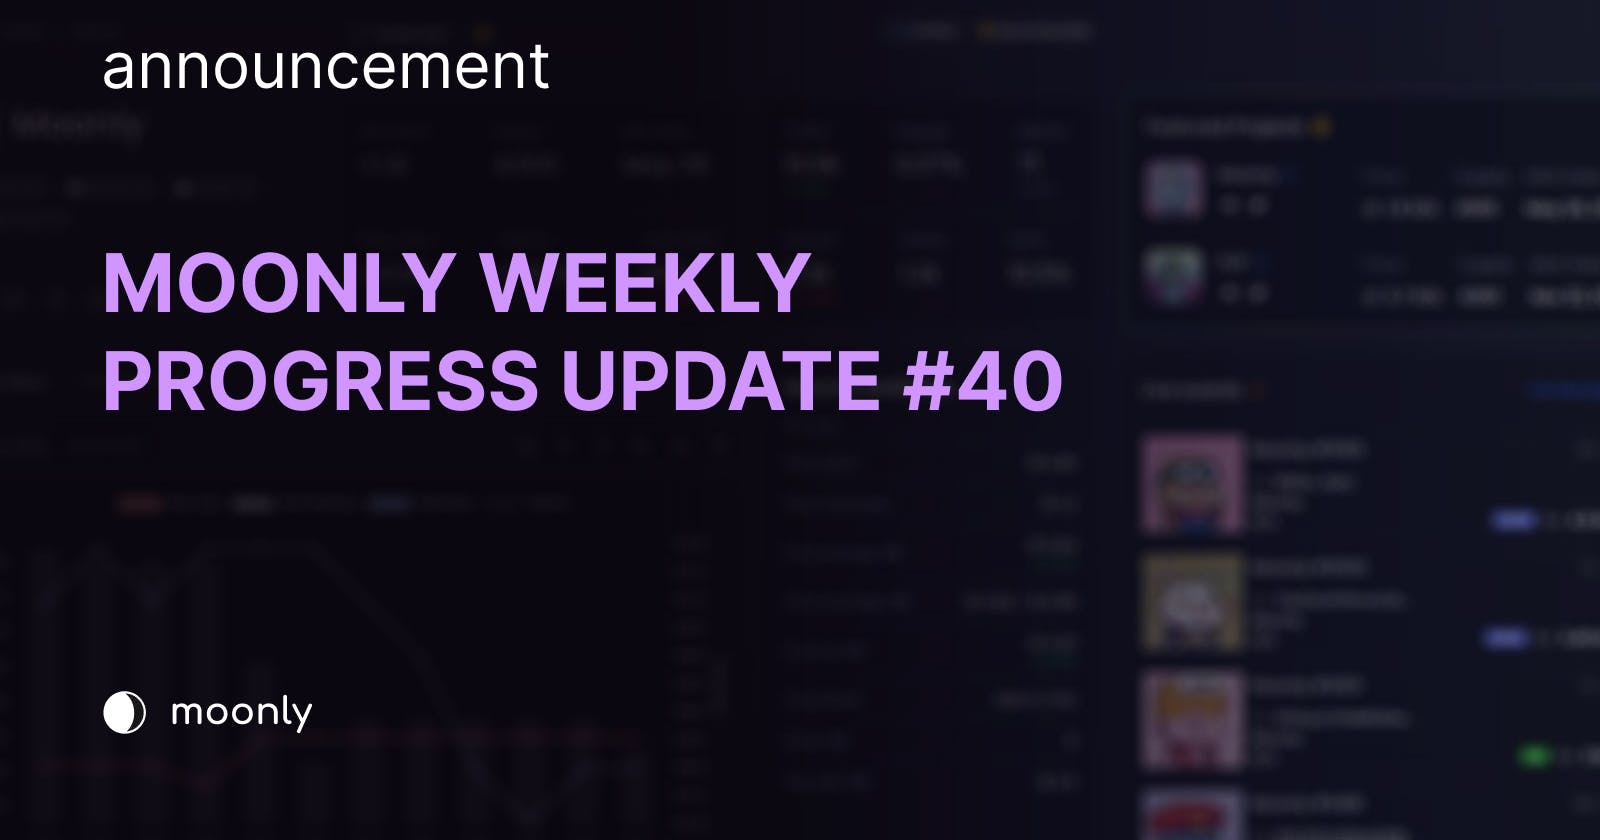 Moonly weekly progress update #40